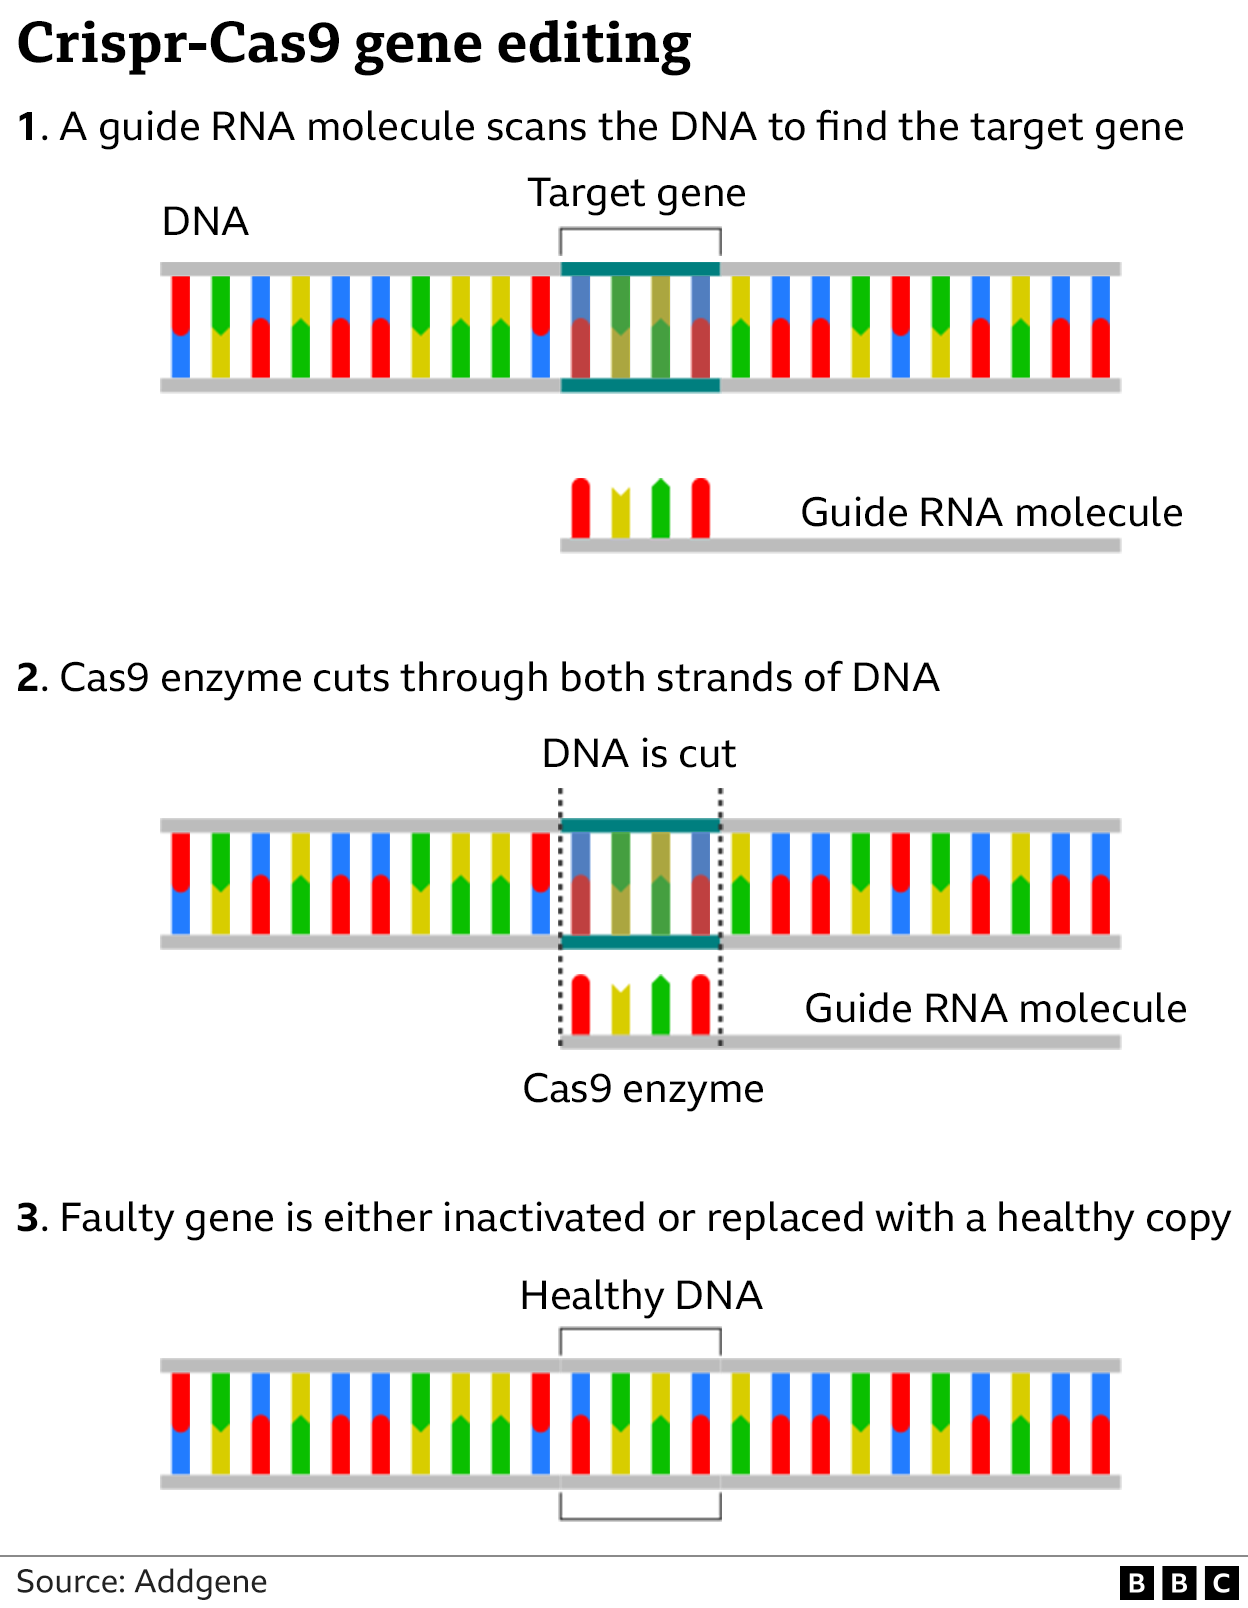 Graphic explaining how Crispr-Cas9 gene editing works